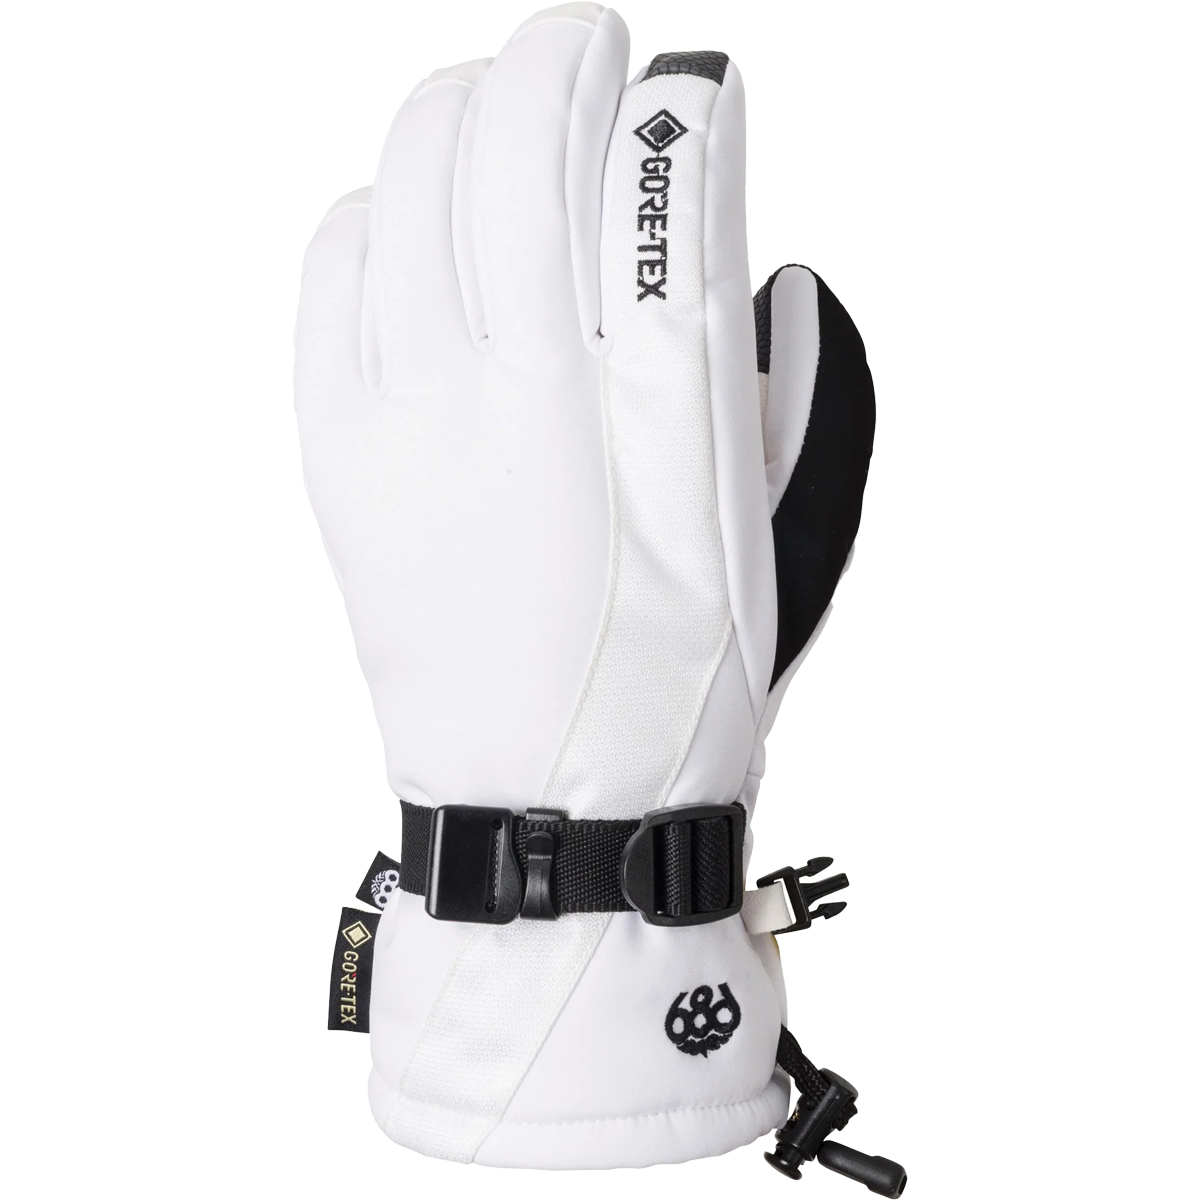 686 GORE-TEX Linear Glove - Men's Black L